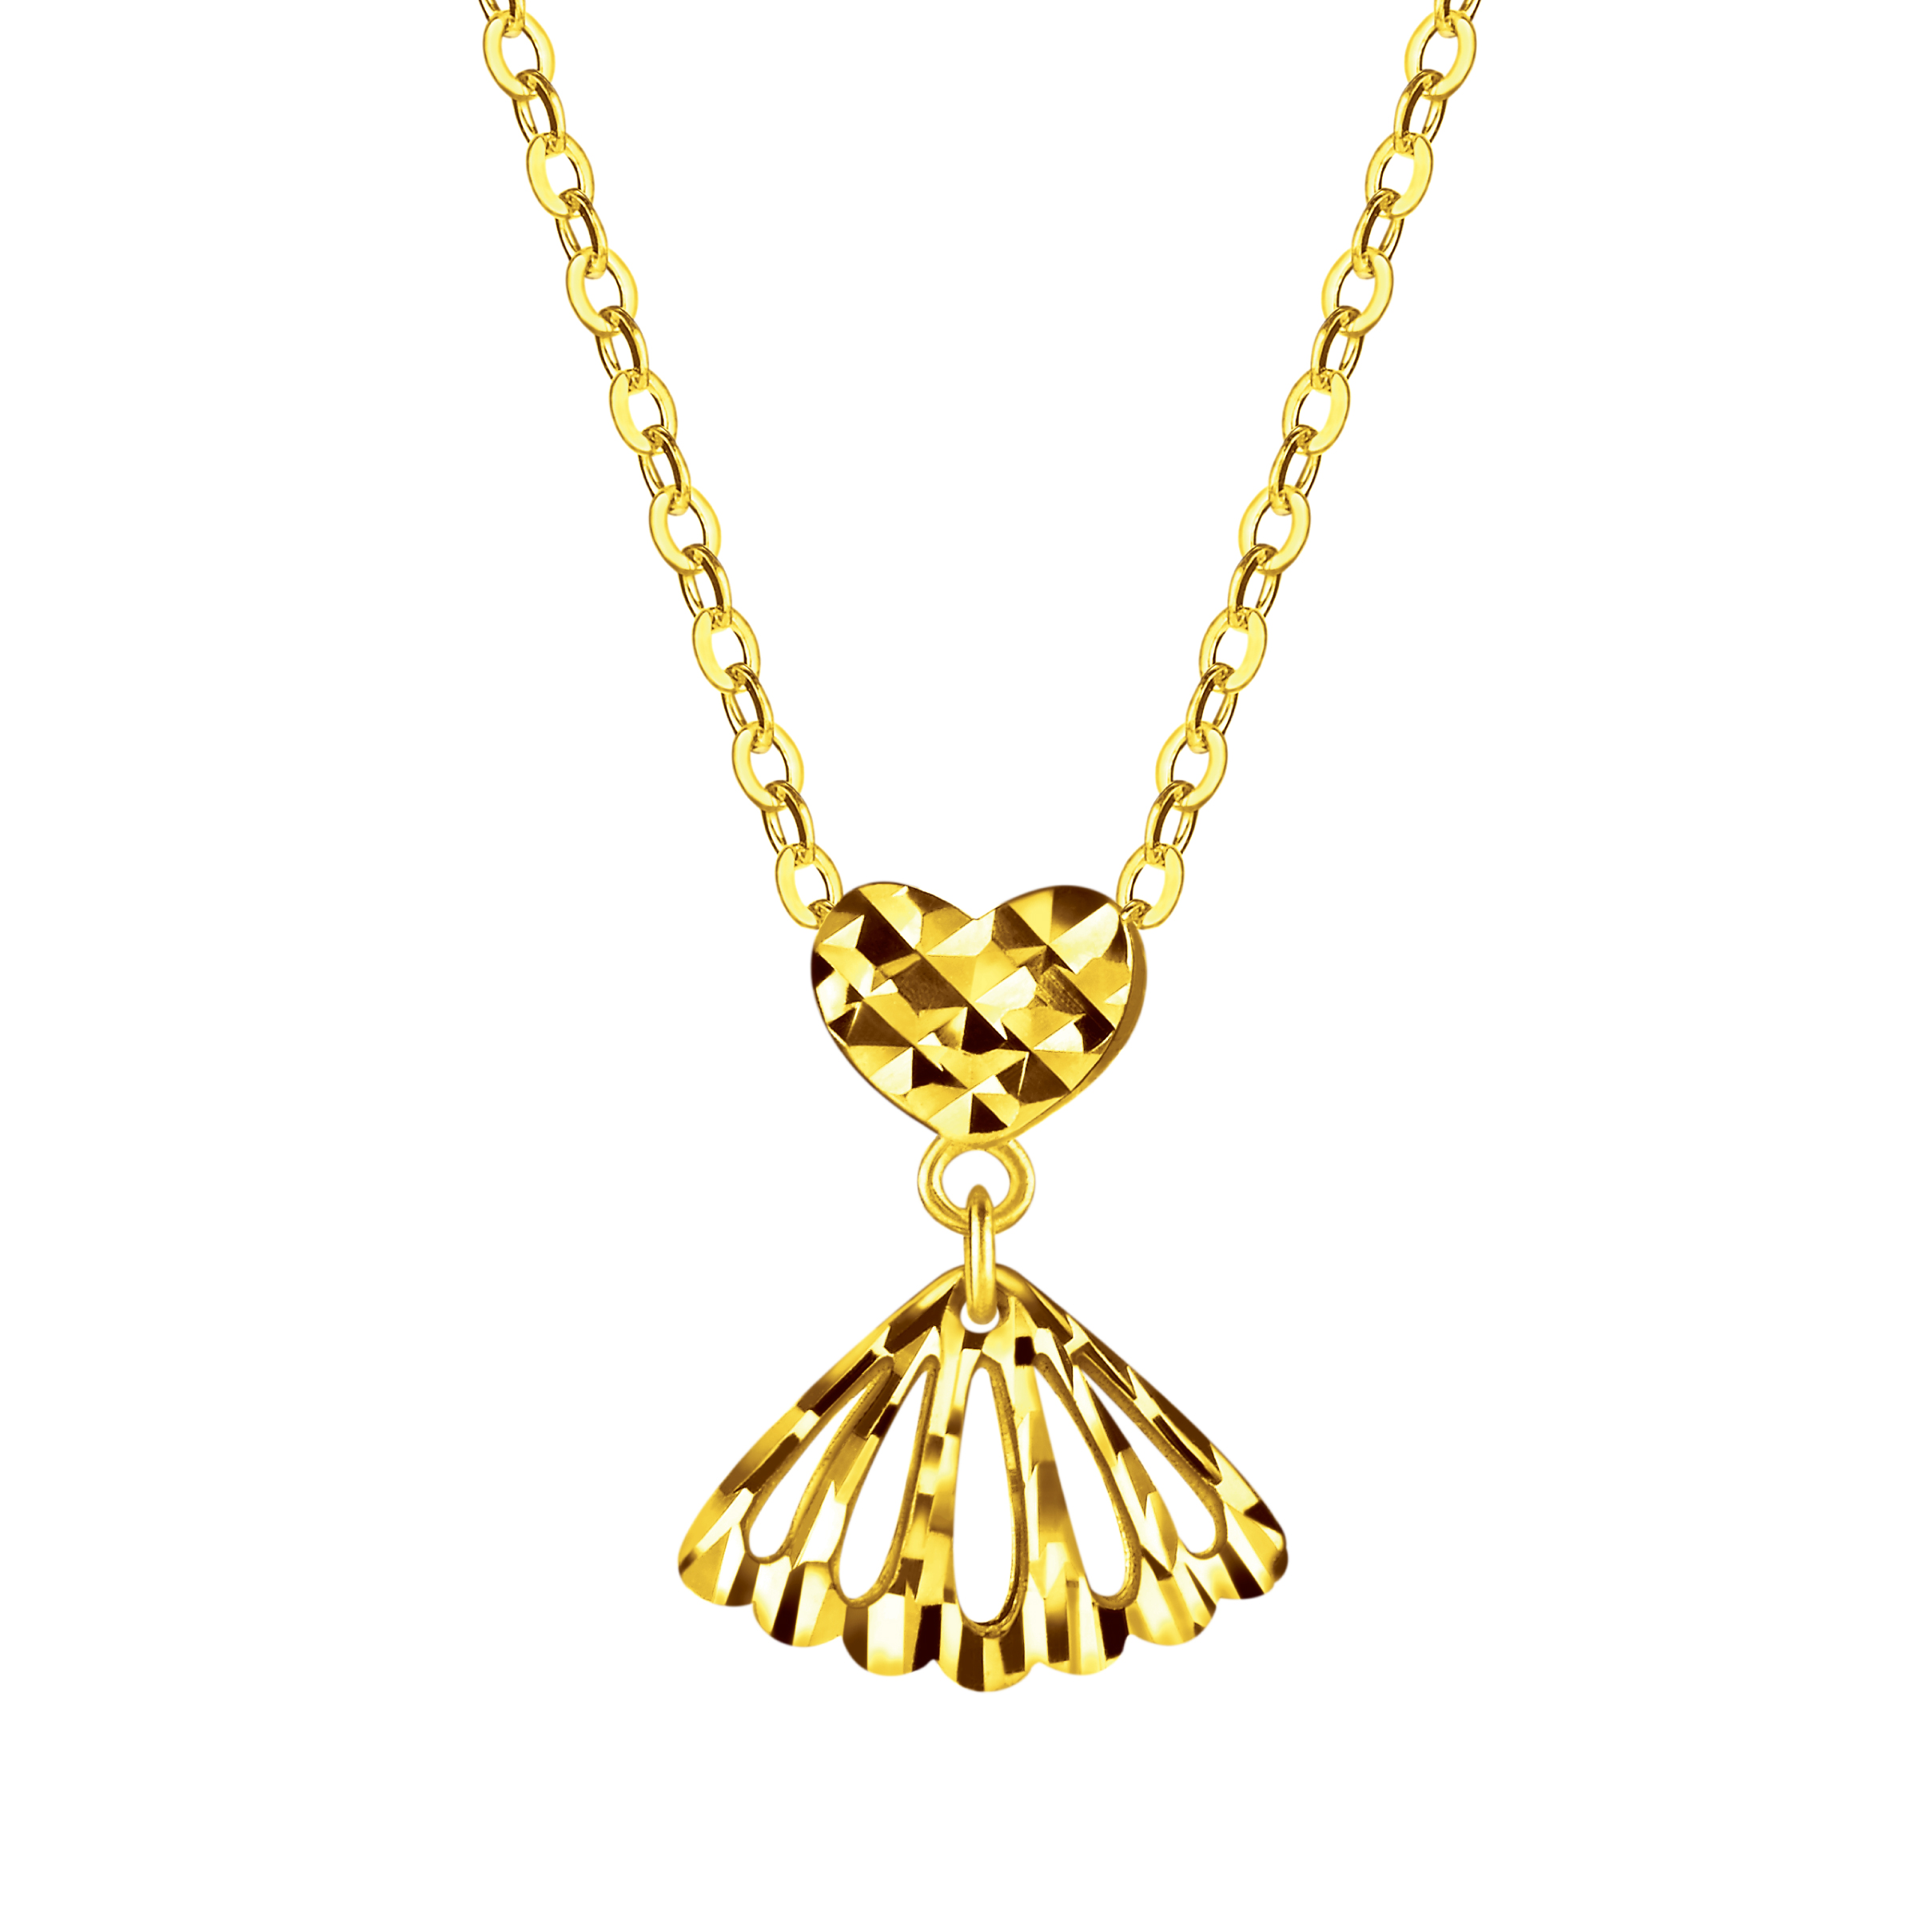 Goldstyle "Beloved Seashell" Gold Pendant